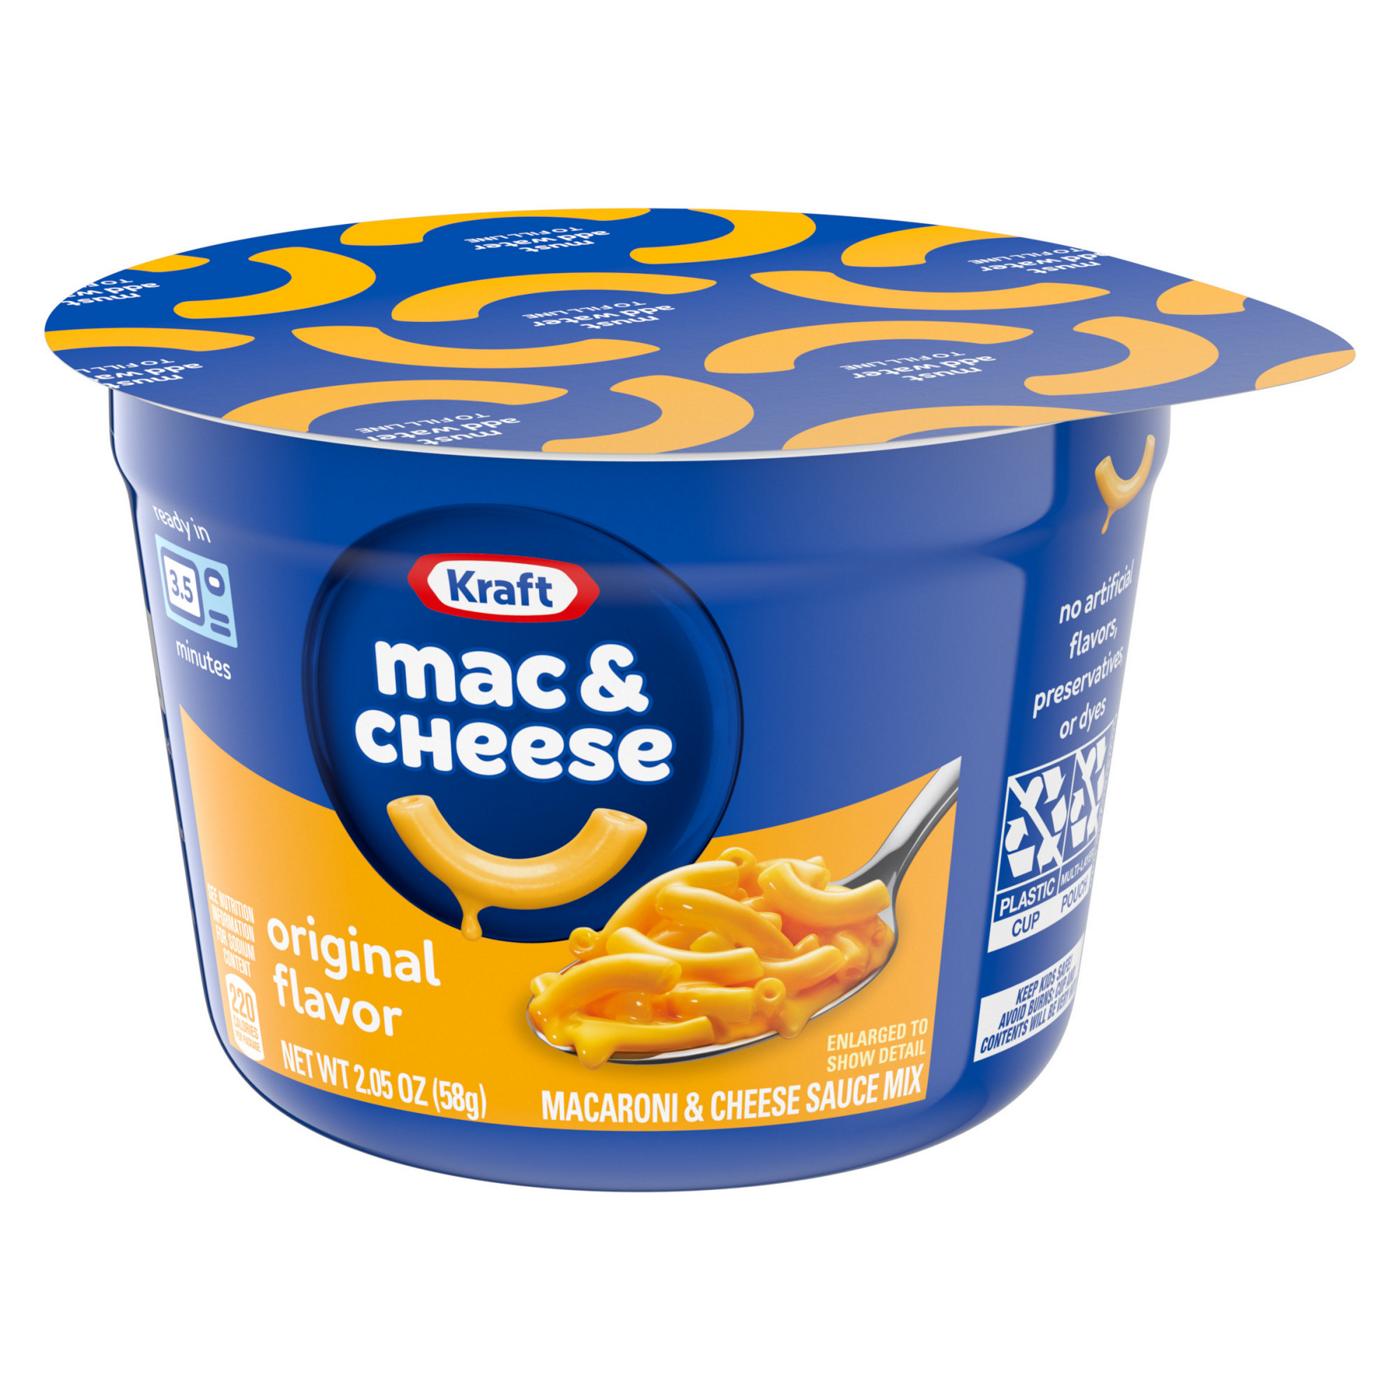 Kraft Original Flavor Macaroni & Cheese Dinner; image 5 of 13